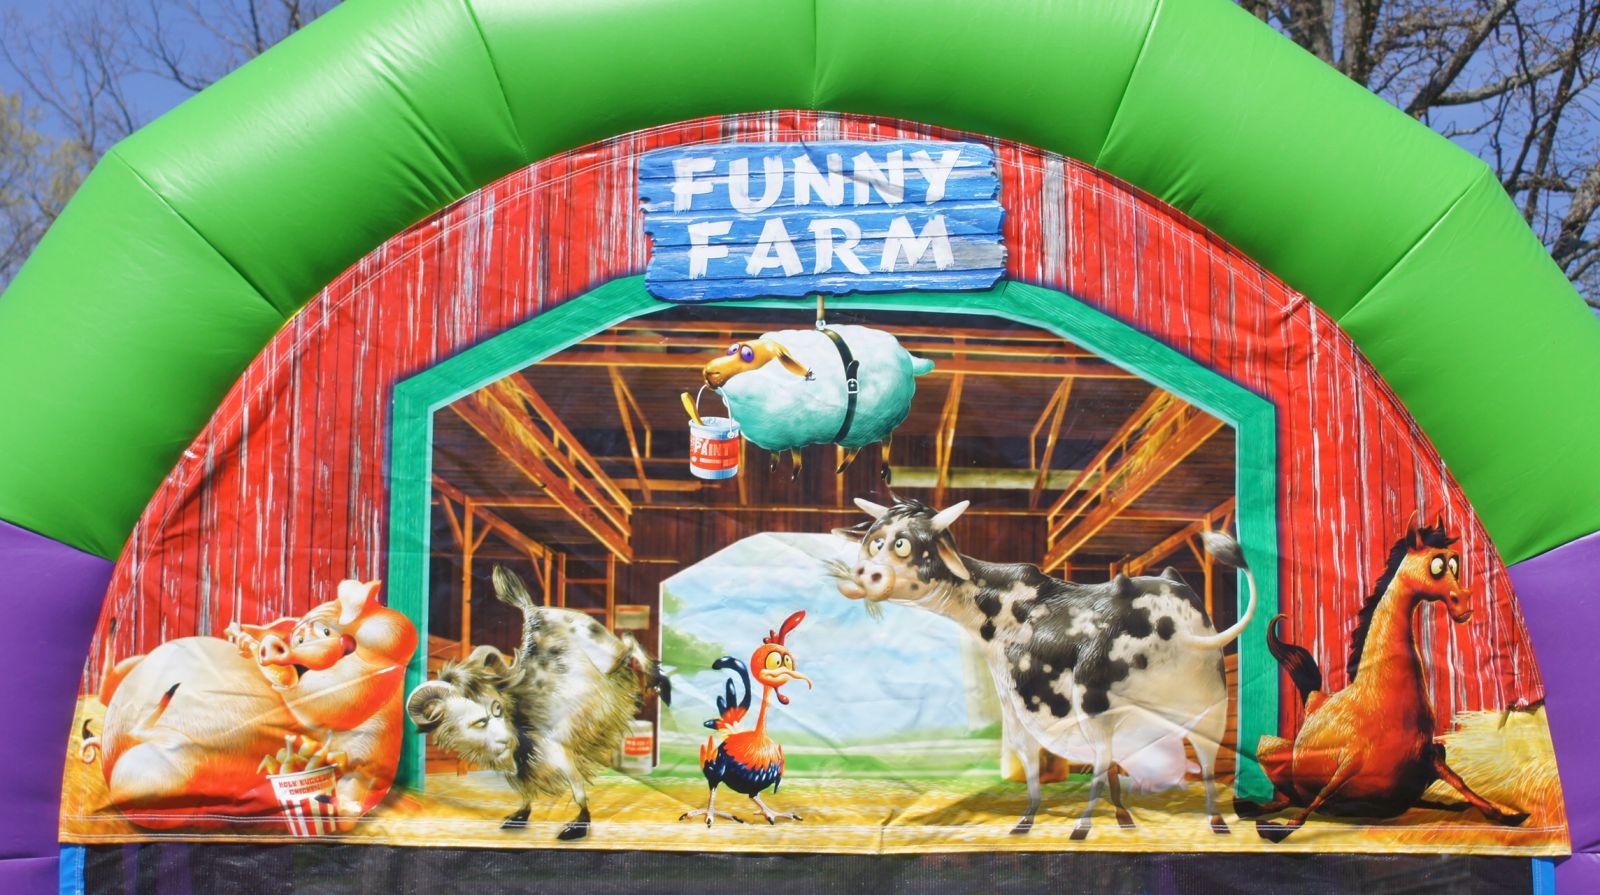 Funny Farm Bounce House Rental Nashville TN Jumping Hearts Party Rentals